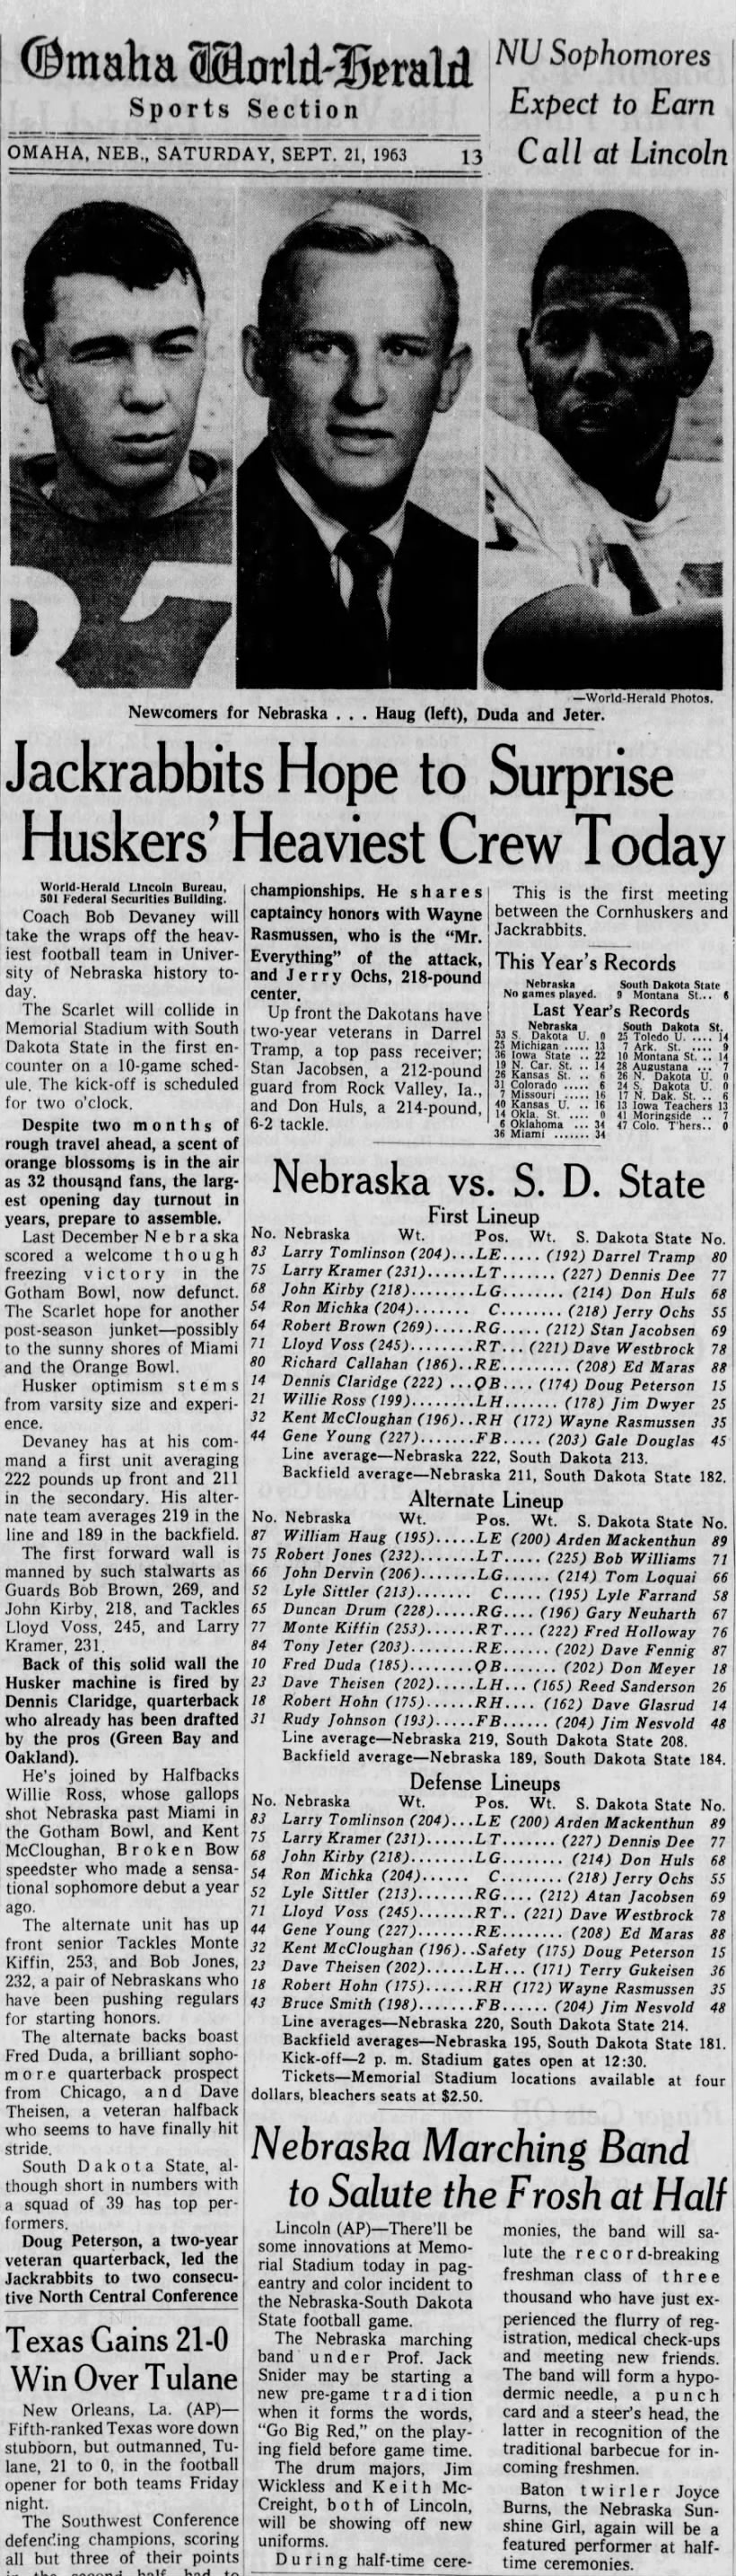 1963 Nebraska-South Dakota State football game preview and lineups